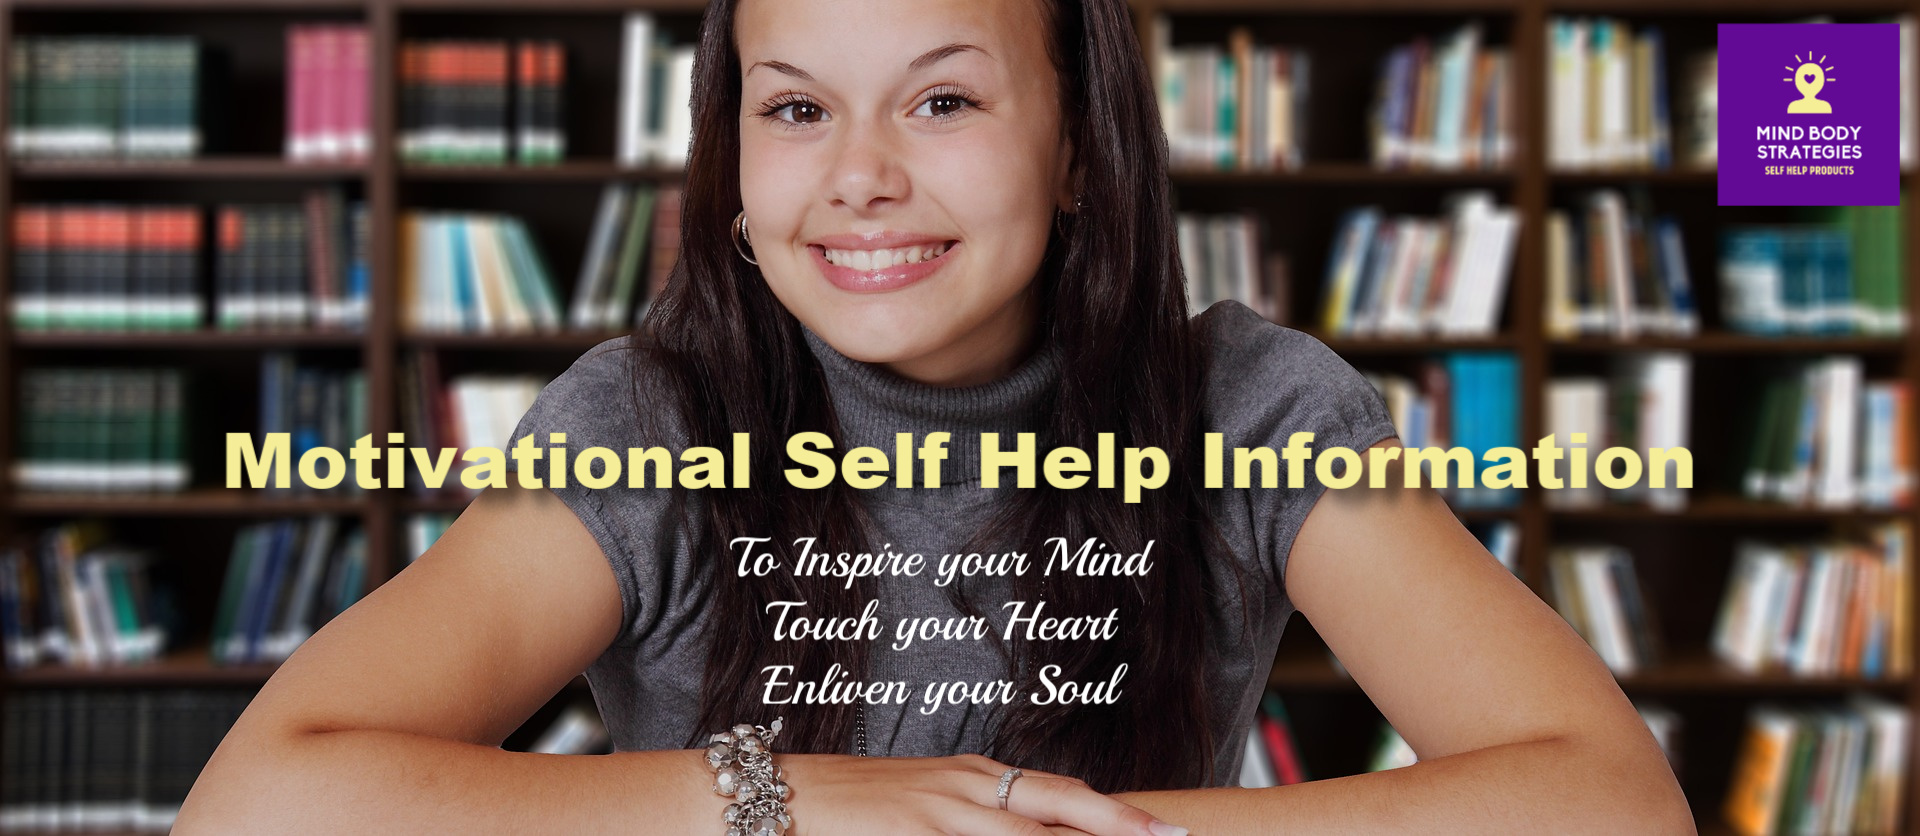 Mind Body Strategies Self Help Products